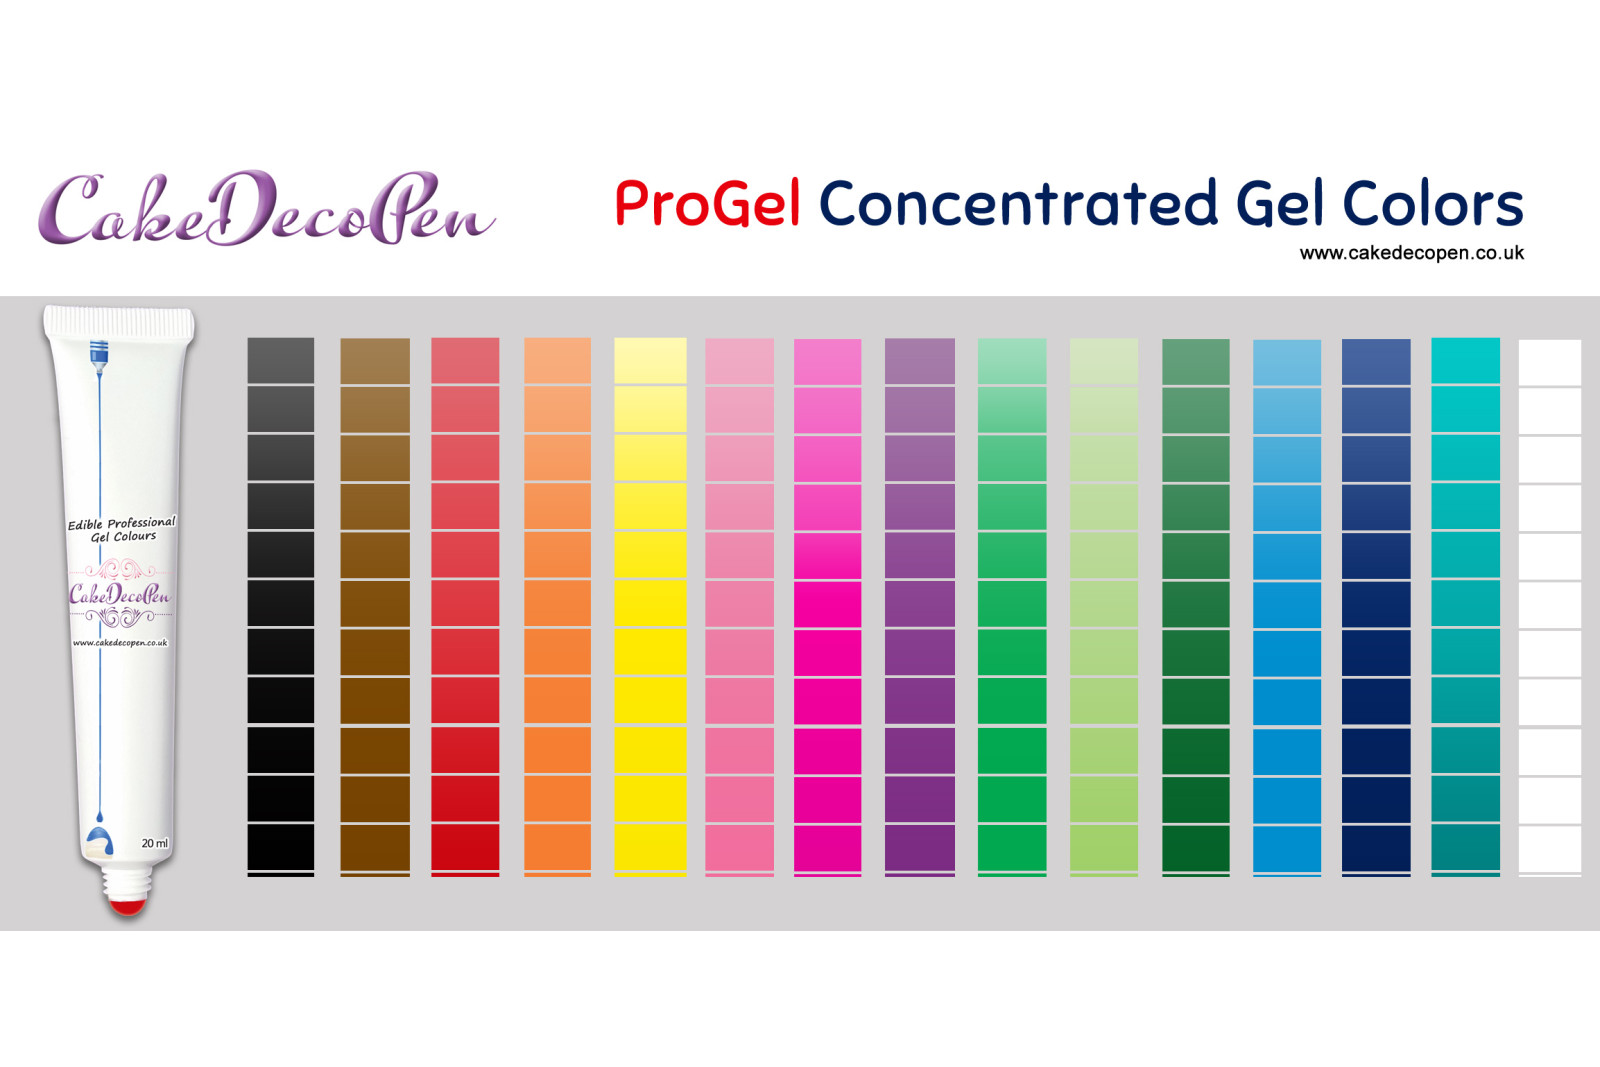 Black | Gel Food Colors | Concentrated ProGel | Cake Decorating | 30 ML